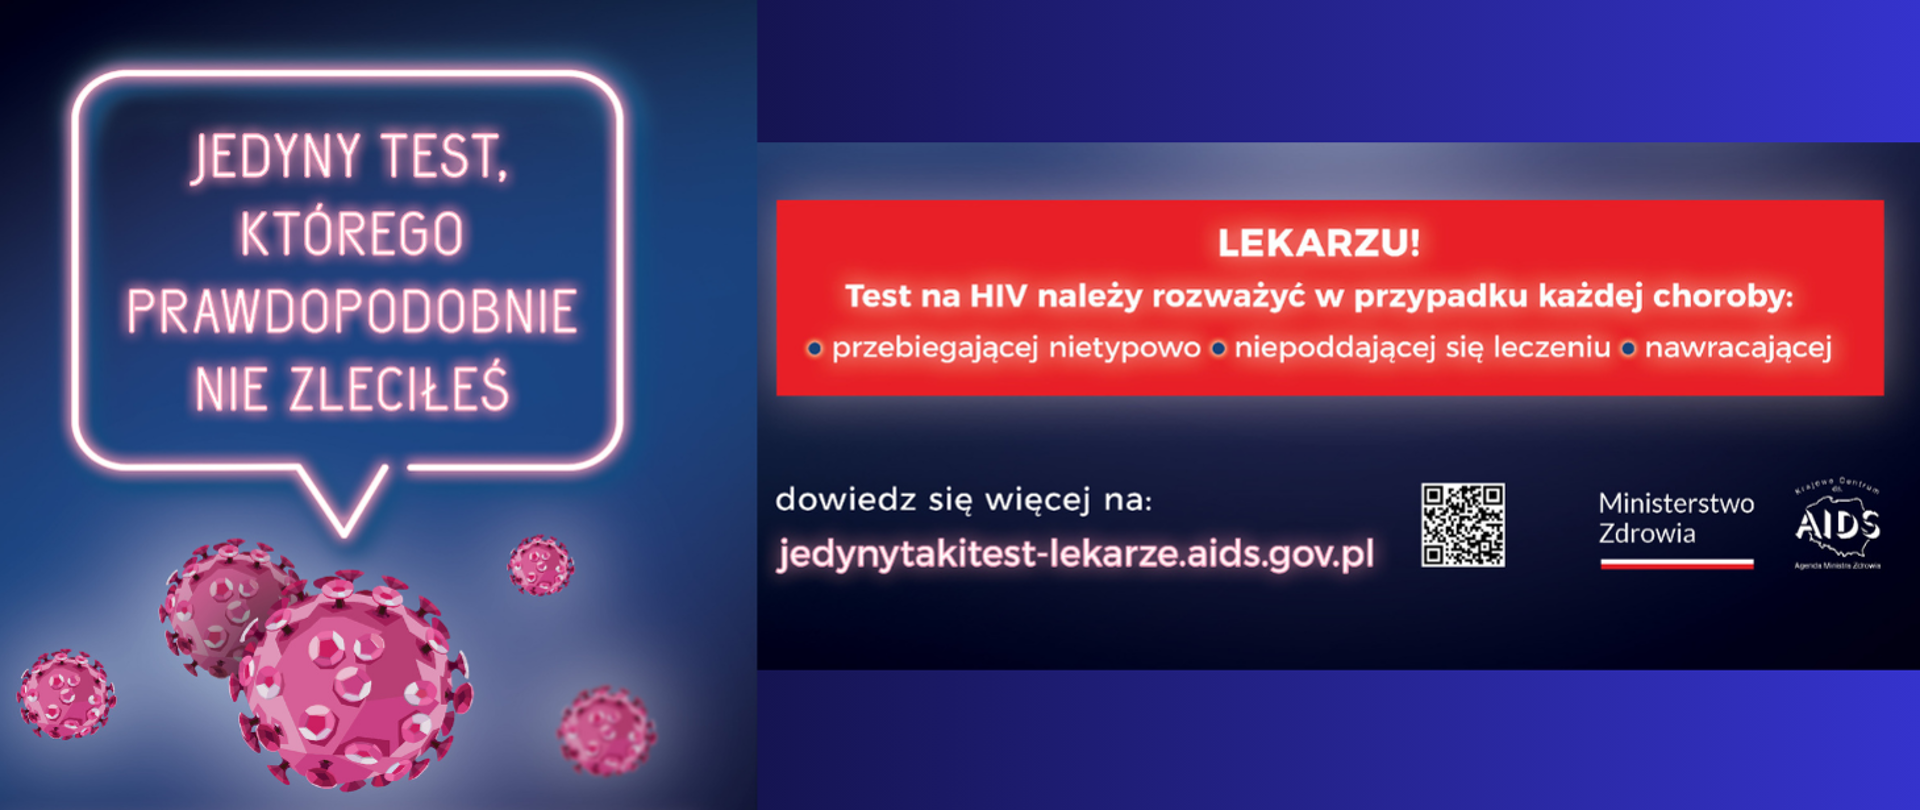 Kampania Krajowego Centrum ds. AIDS